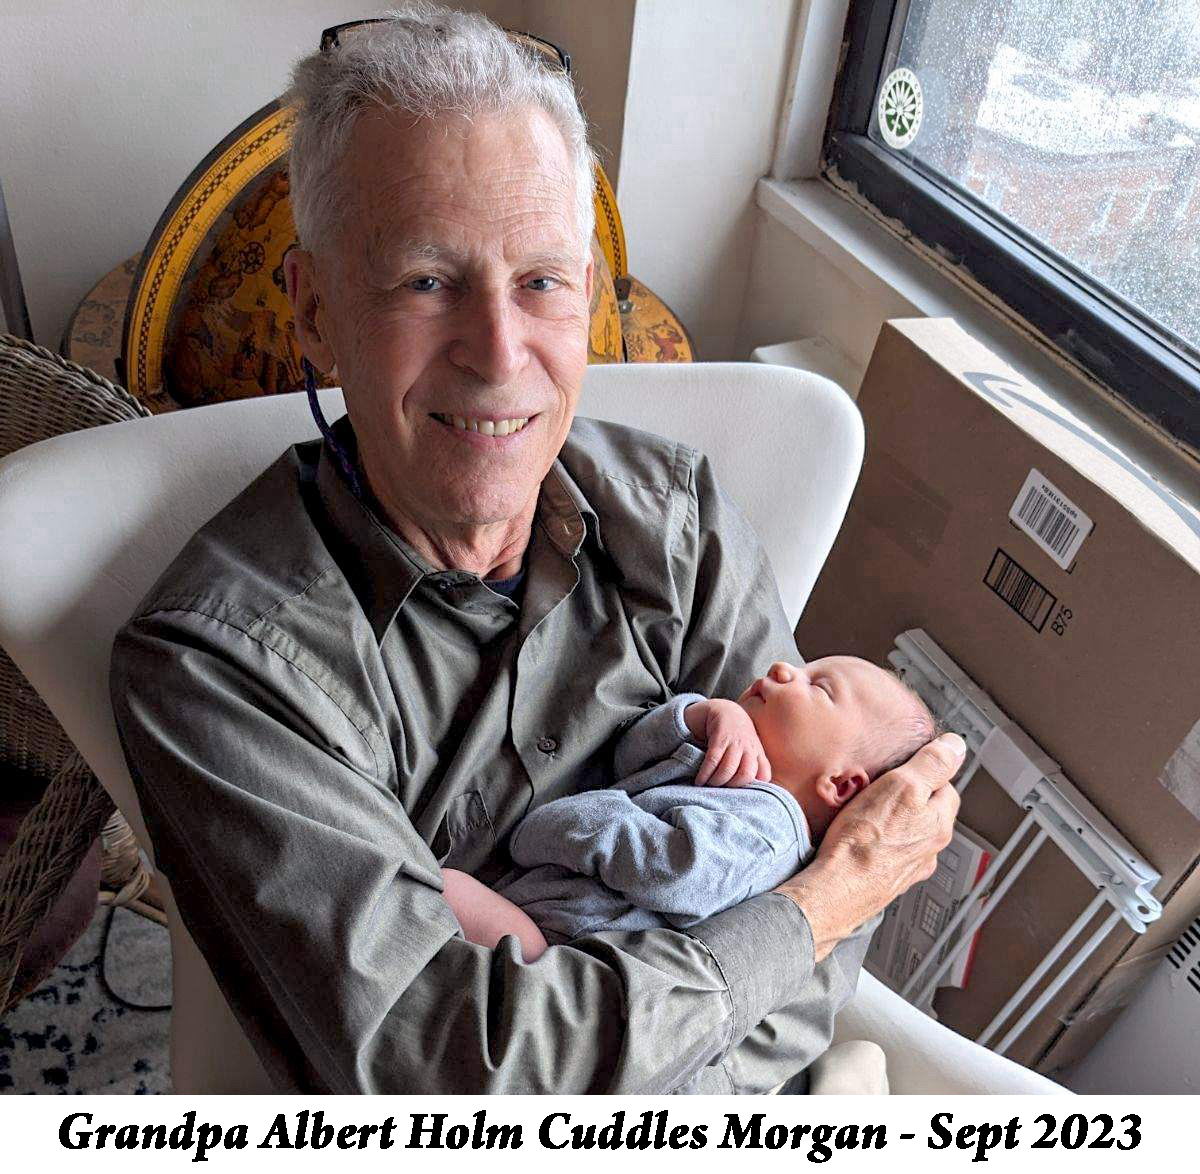 Grandpa Albertt Holm cuddles Morgan by the apartment’s window